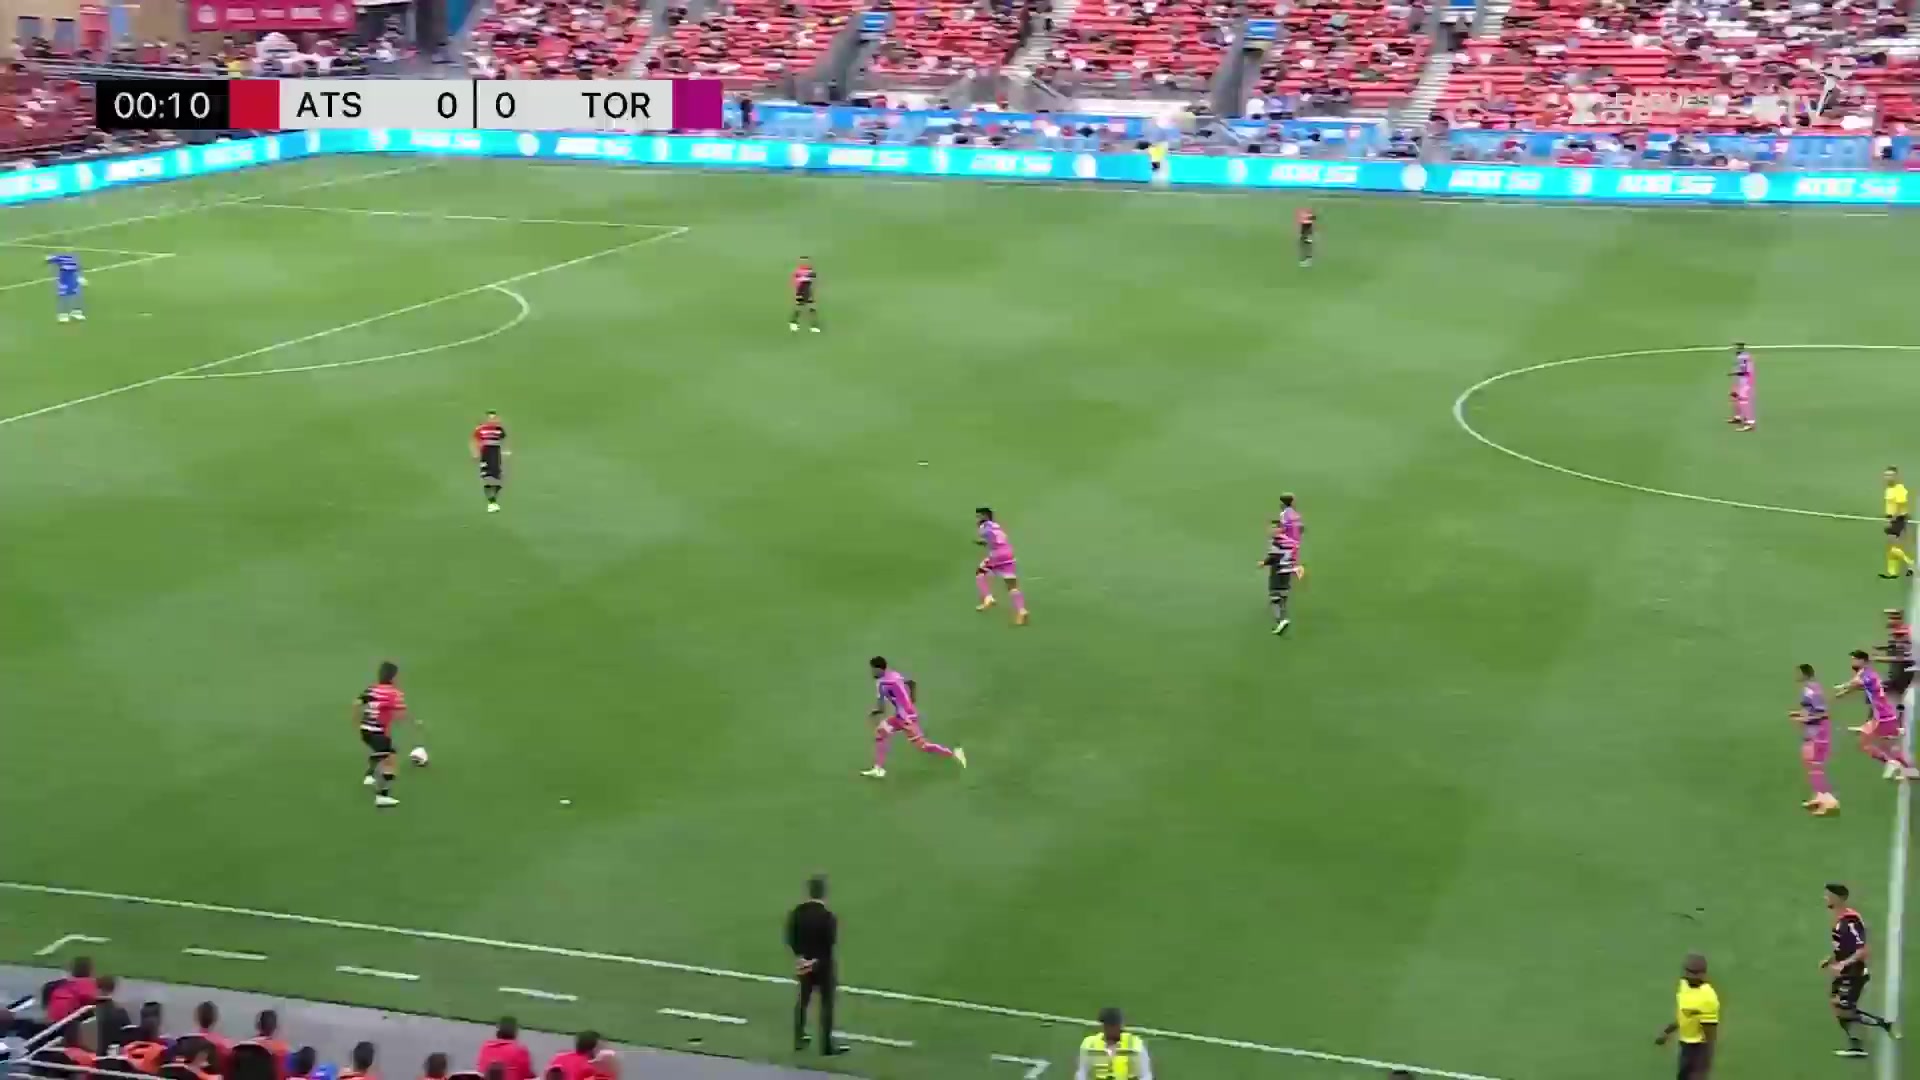 CONCACAF Cup Atlas Vs Toronto FC  Goal in 1 min, Score 0:1